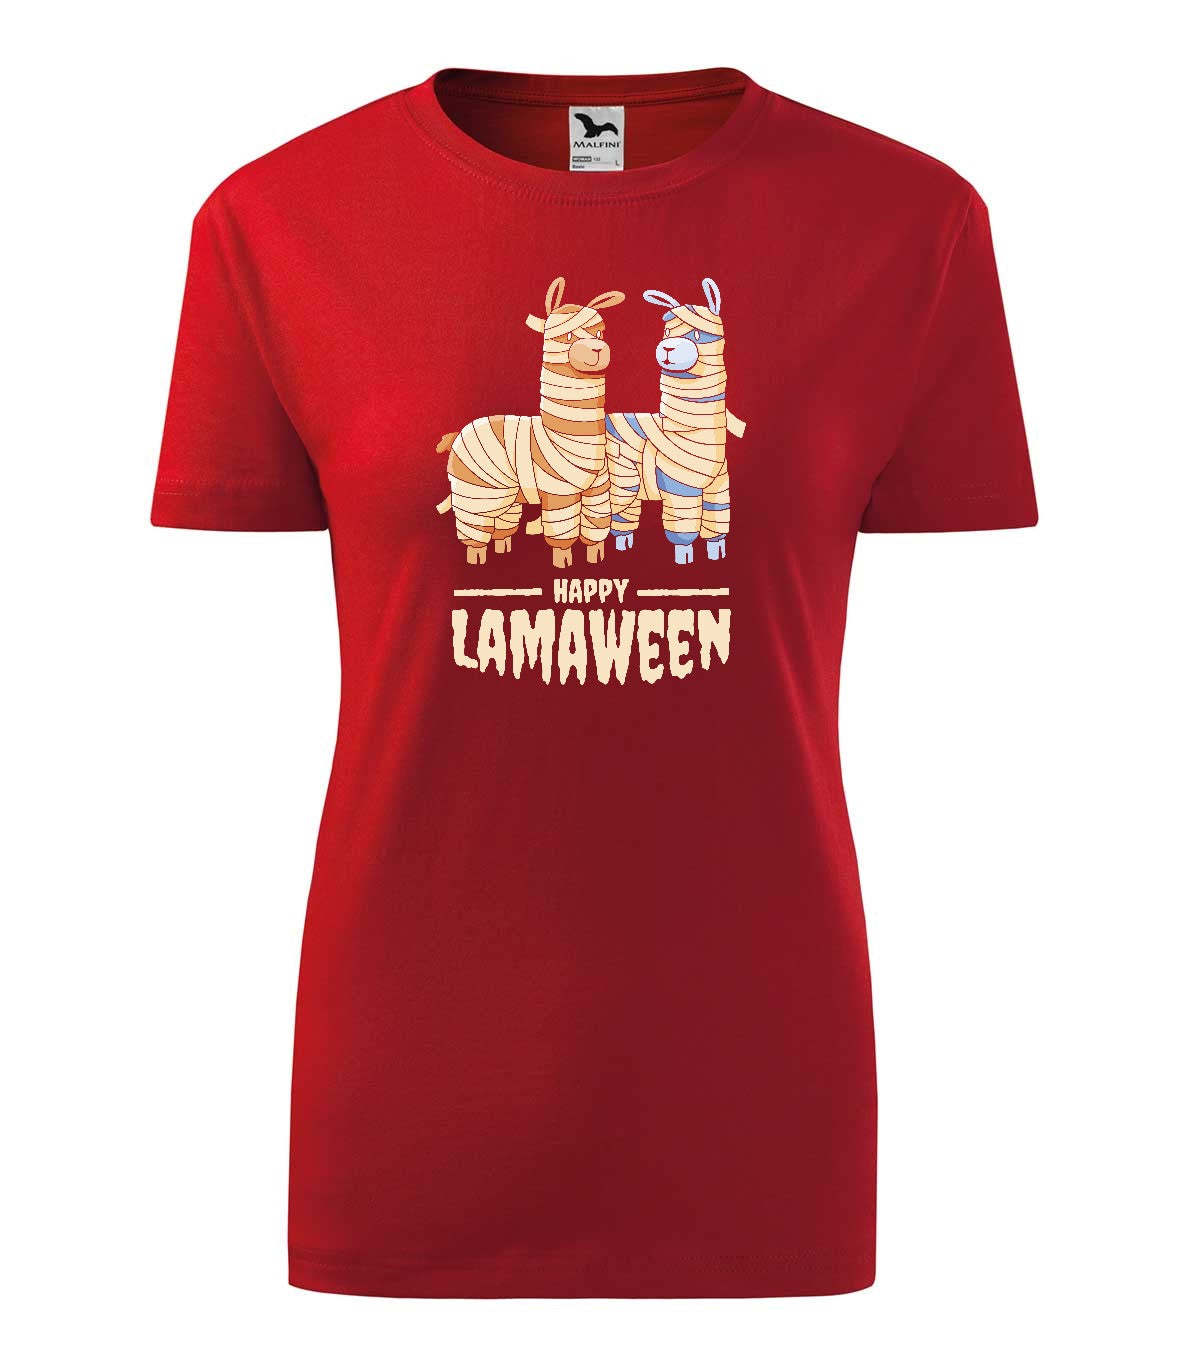 Happy Lamaween női technikai póló